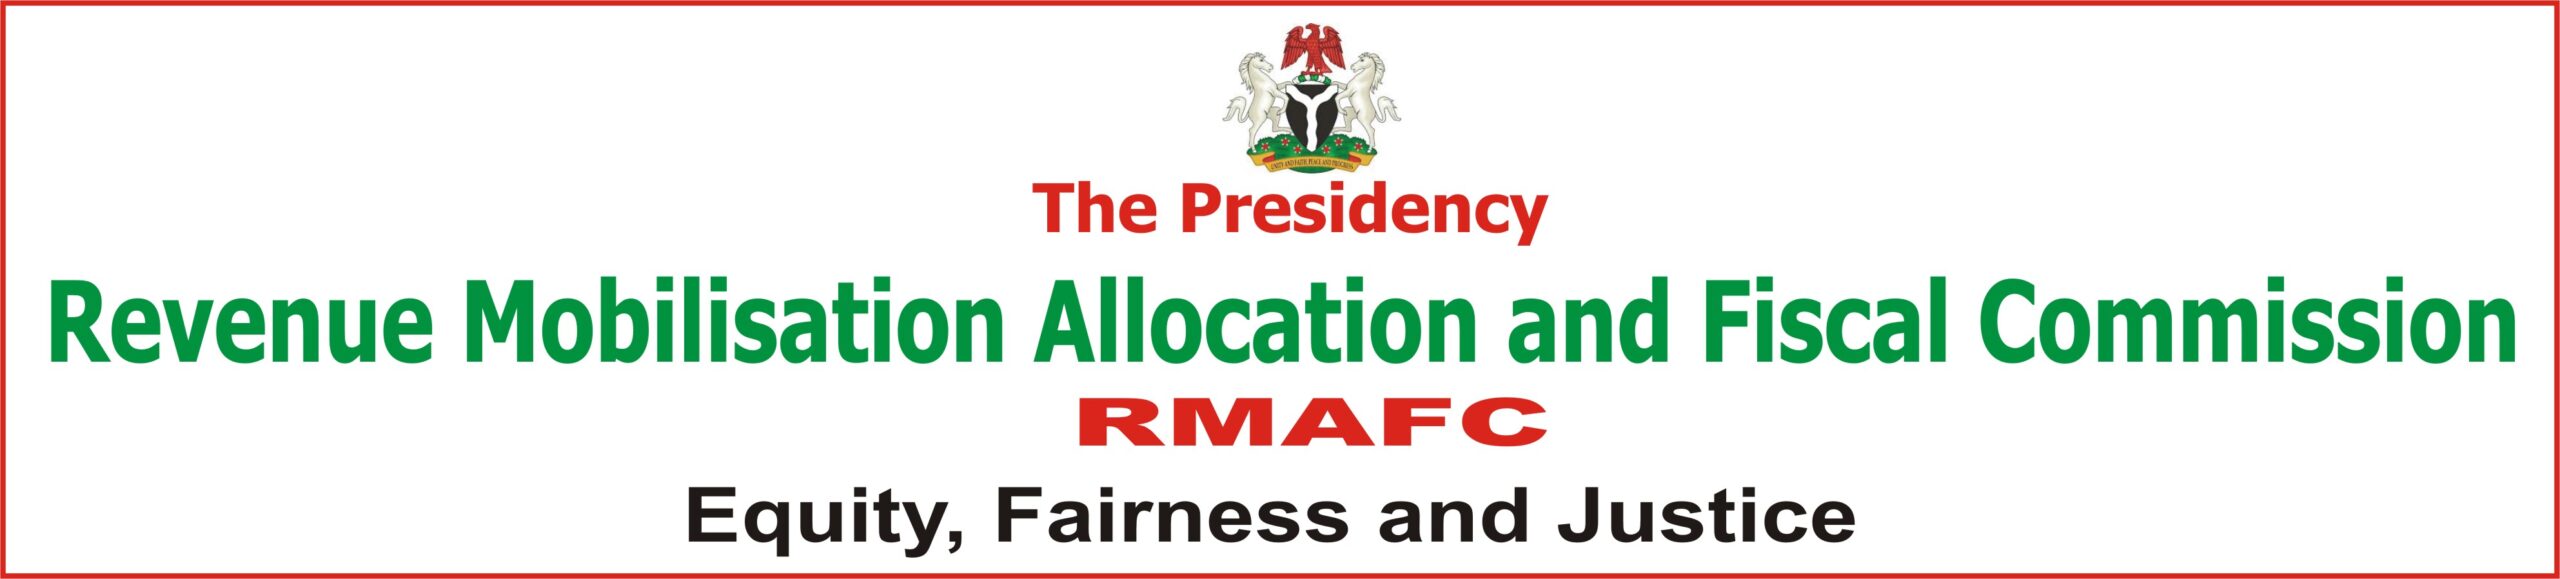 RMAFC Revenue Formula